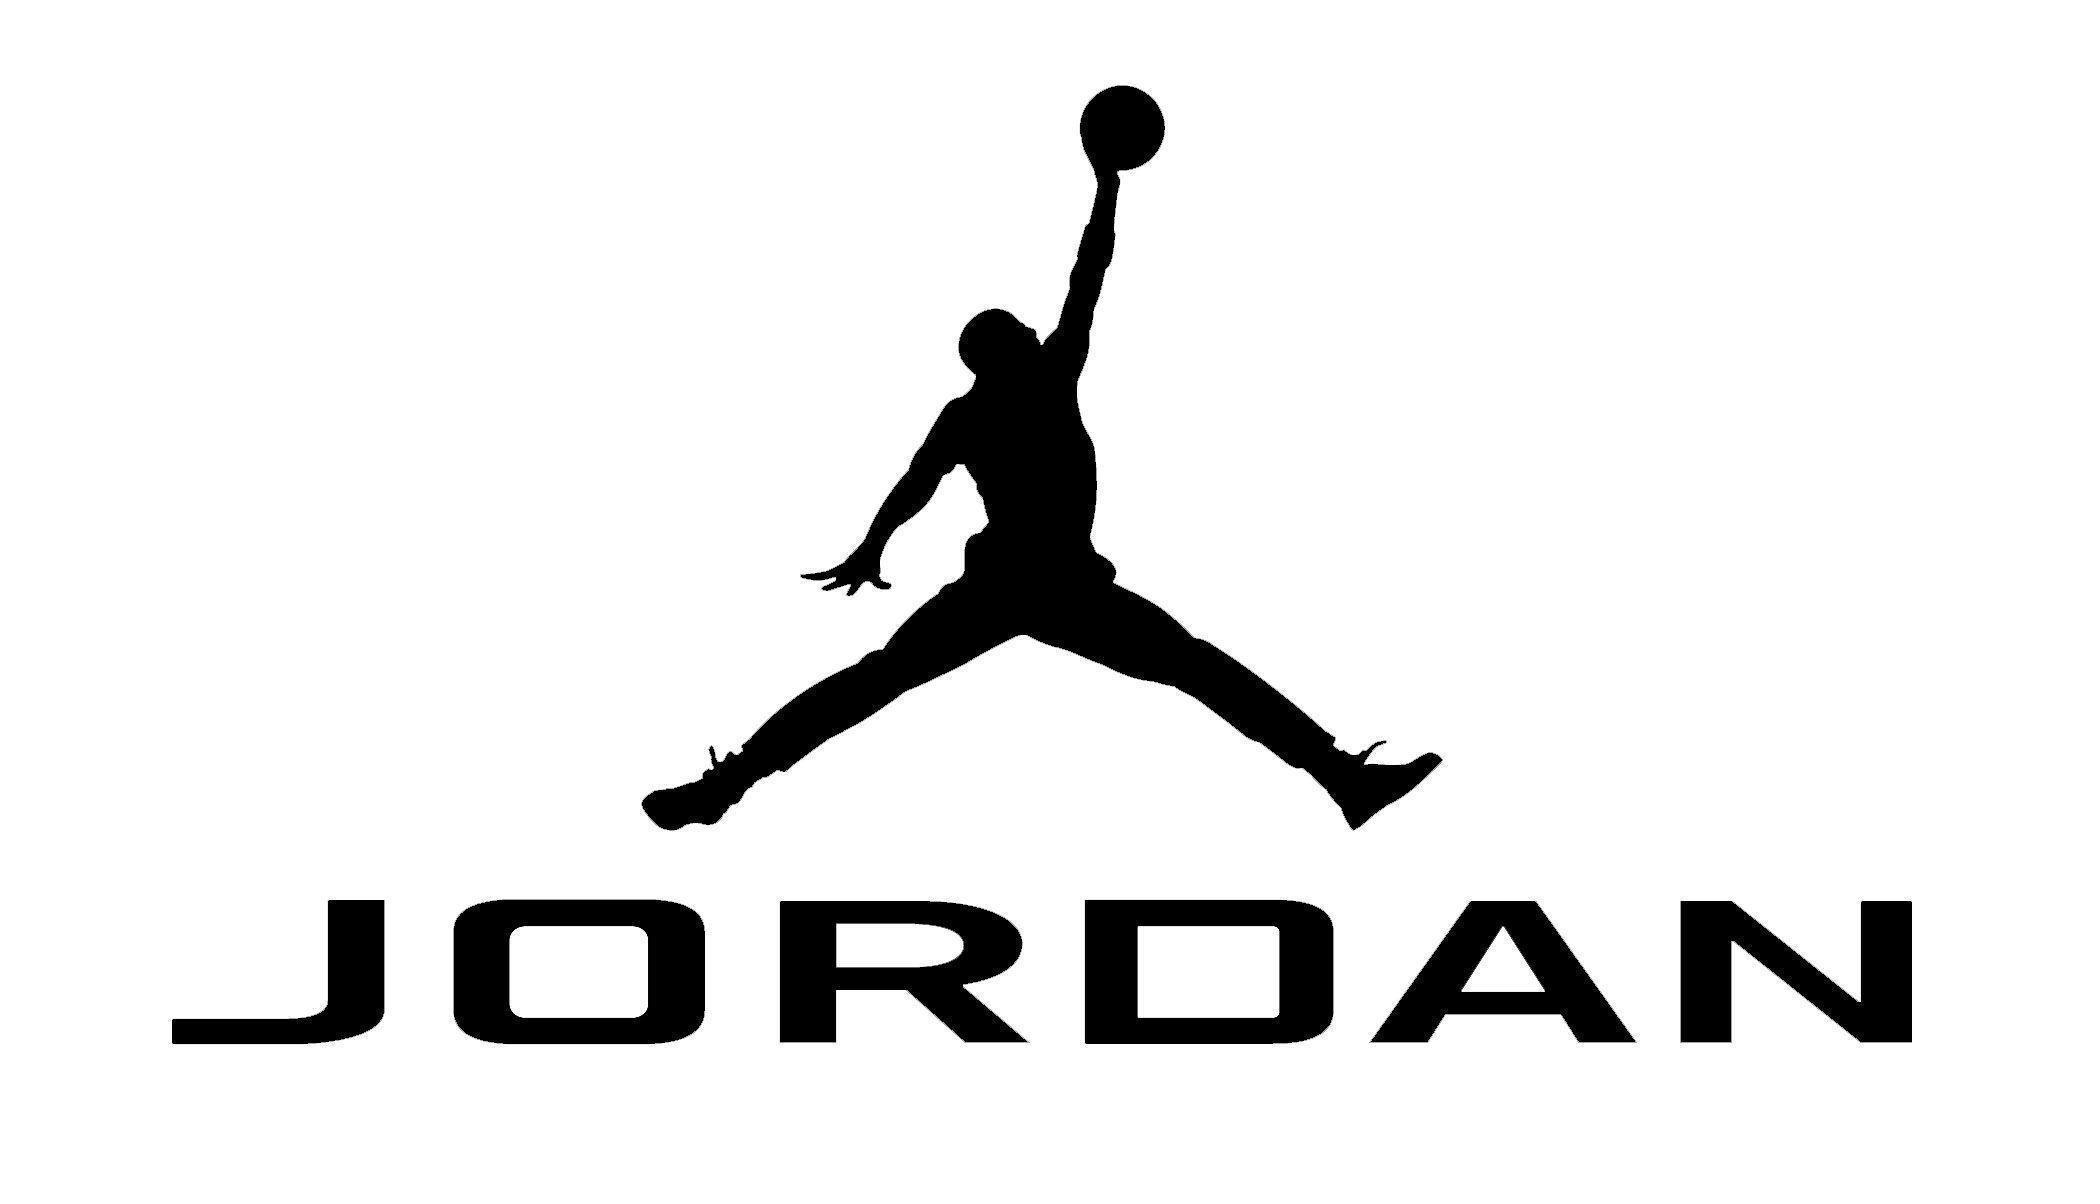 Michael Jordan Logo 6 Backgrounds